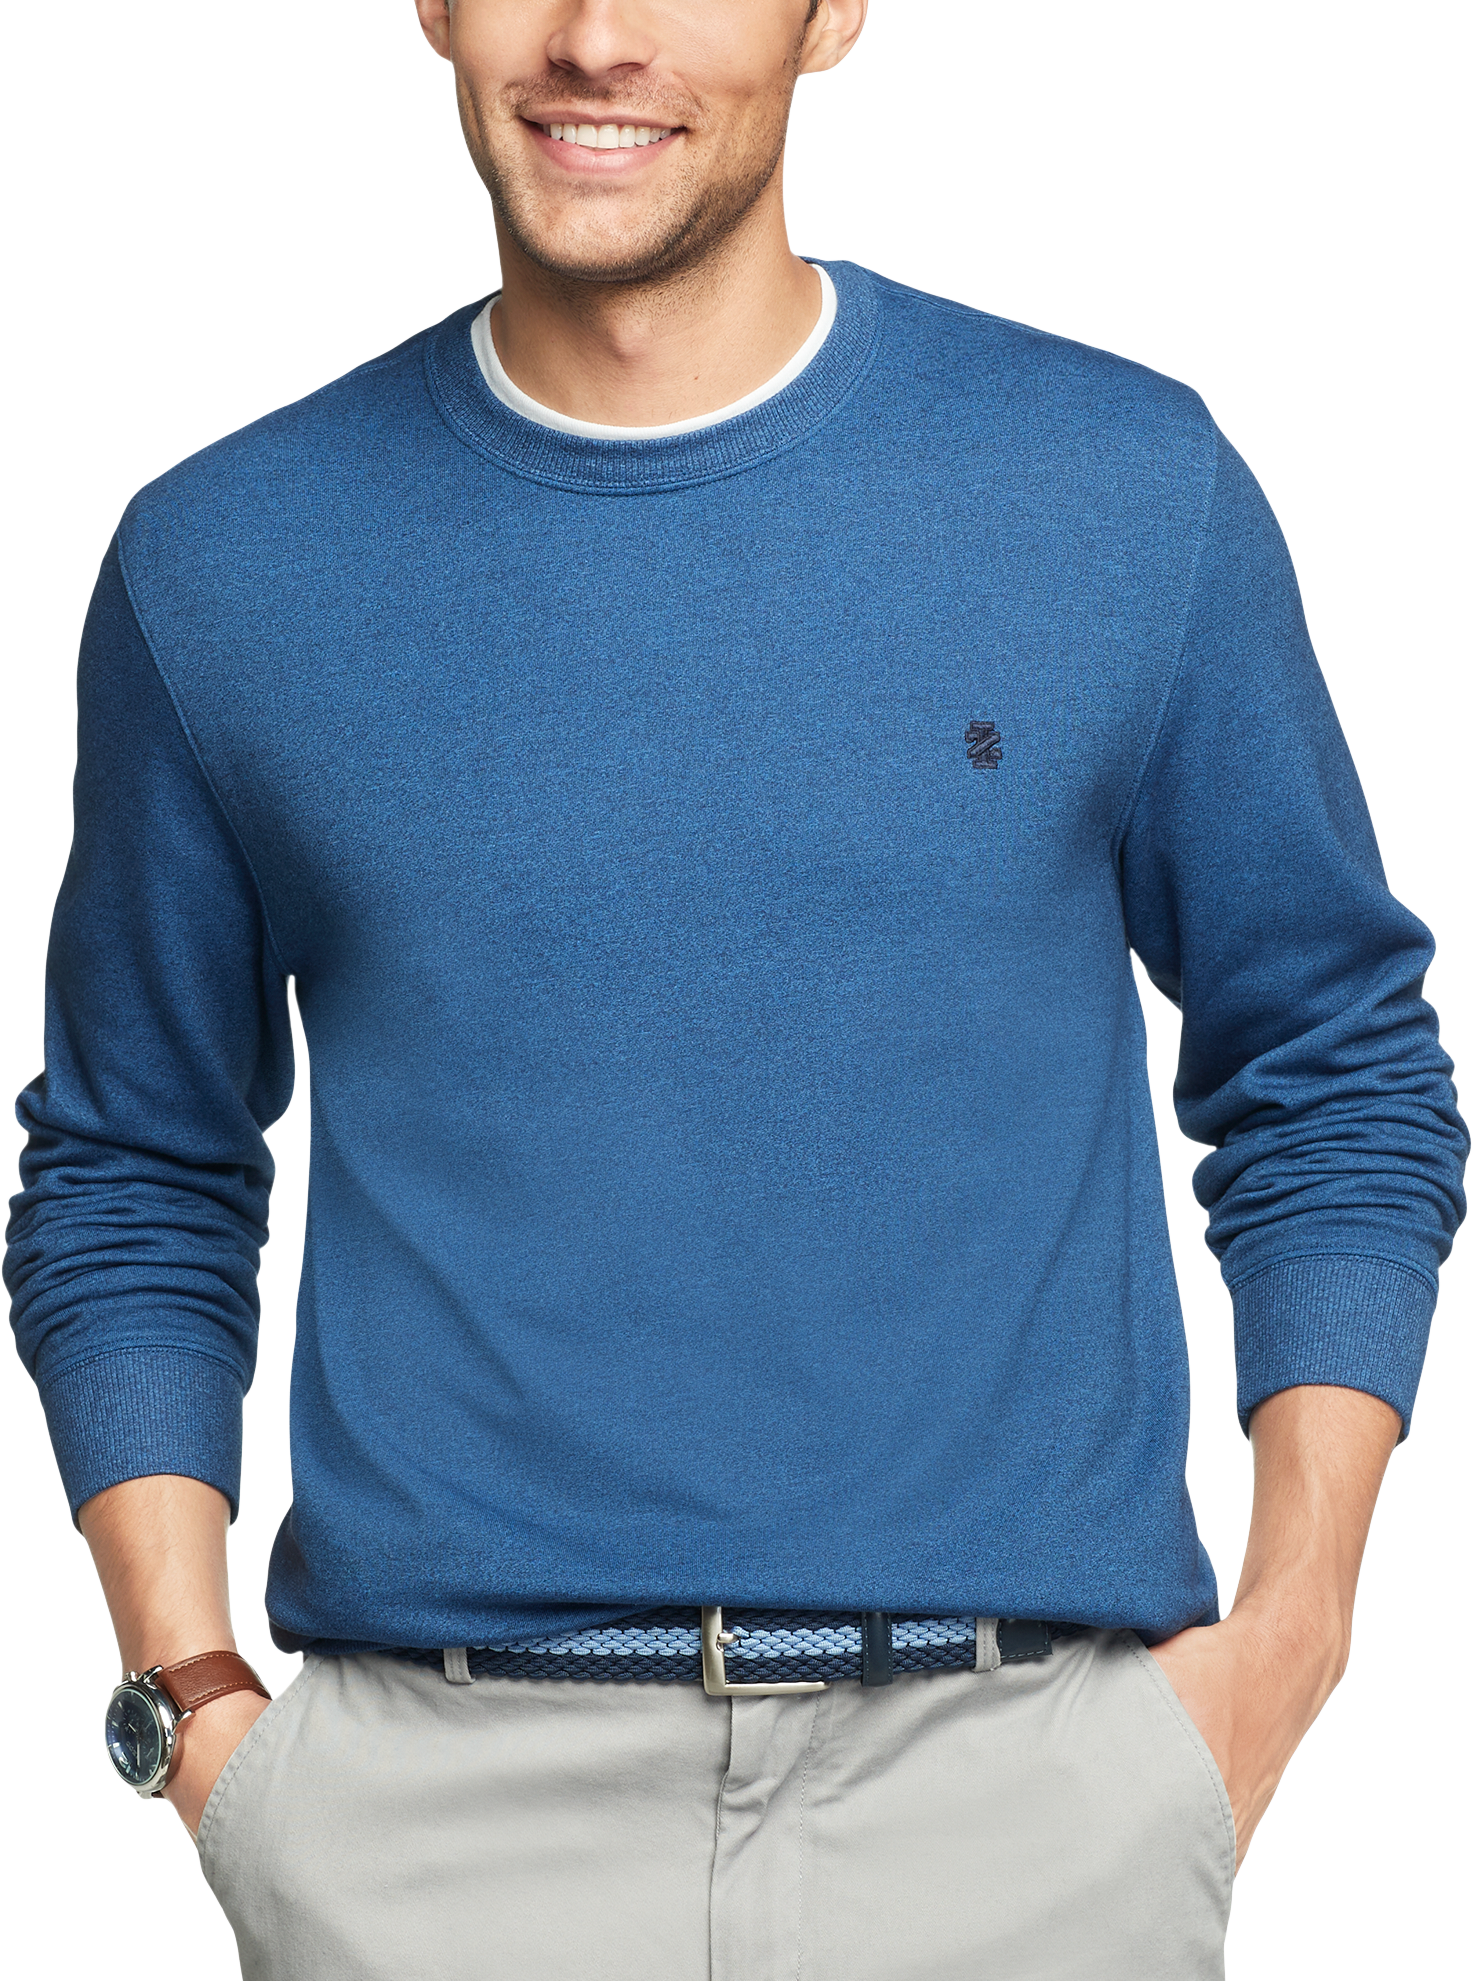 IZOD Classic Fit Crew Neck Fleece, Blue - Men's Sweaters | Men's Wearhouse